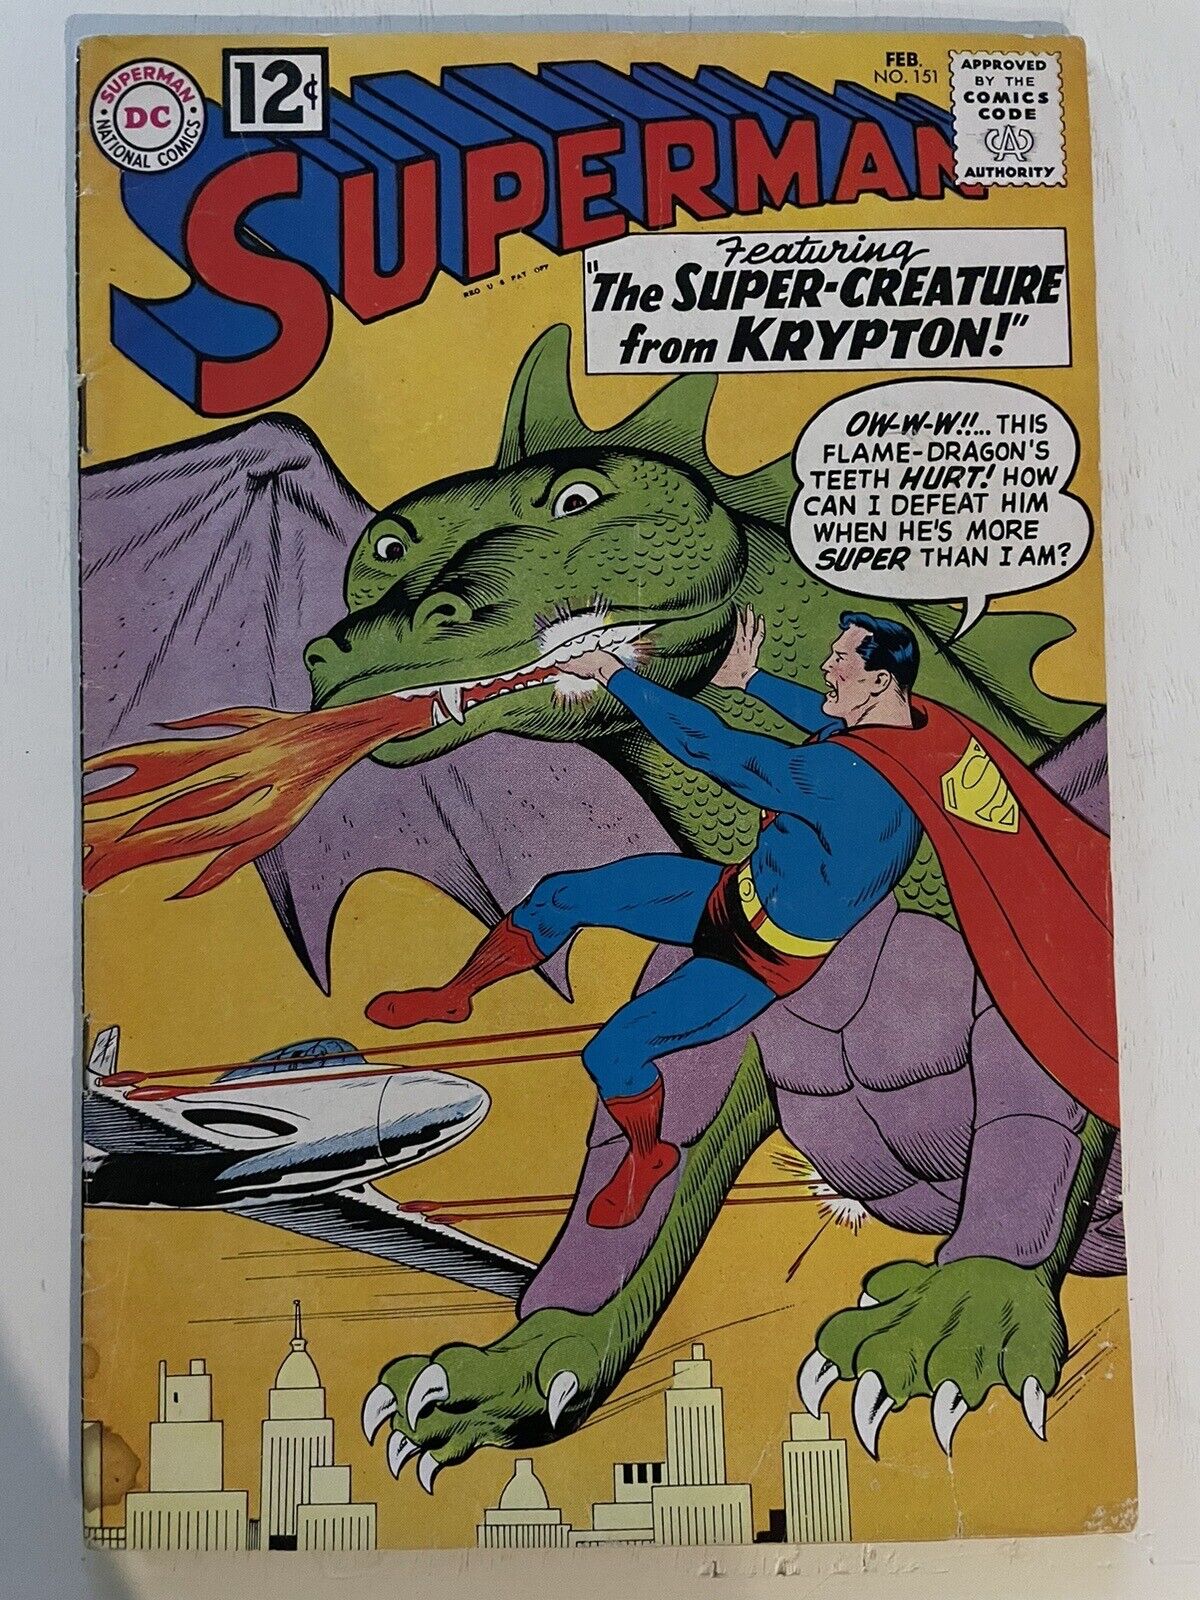 Superman 151 (DC, 1962) Curt Swan Cover